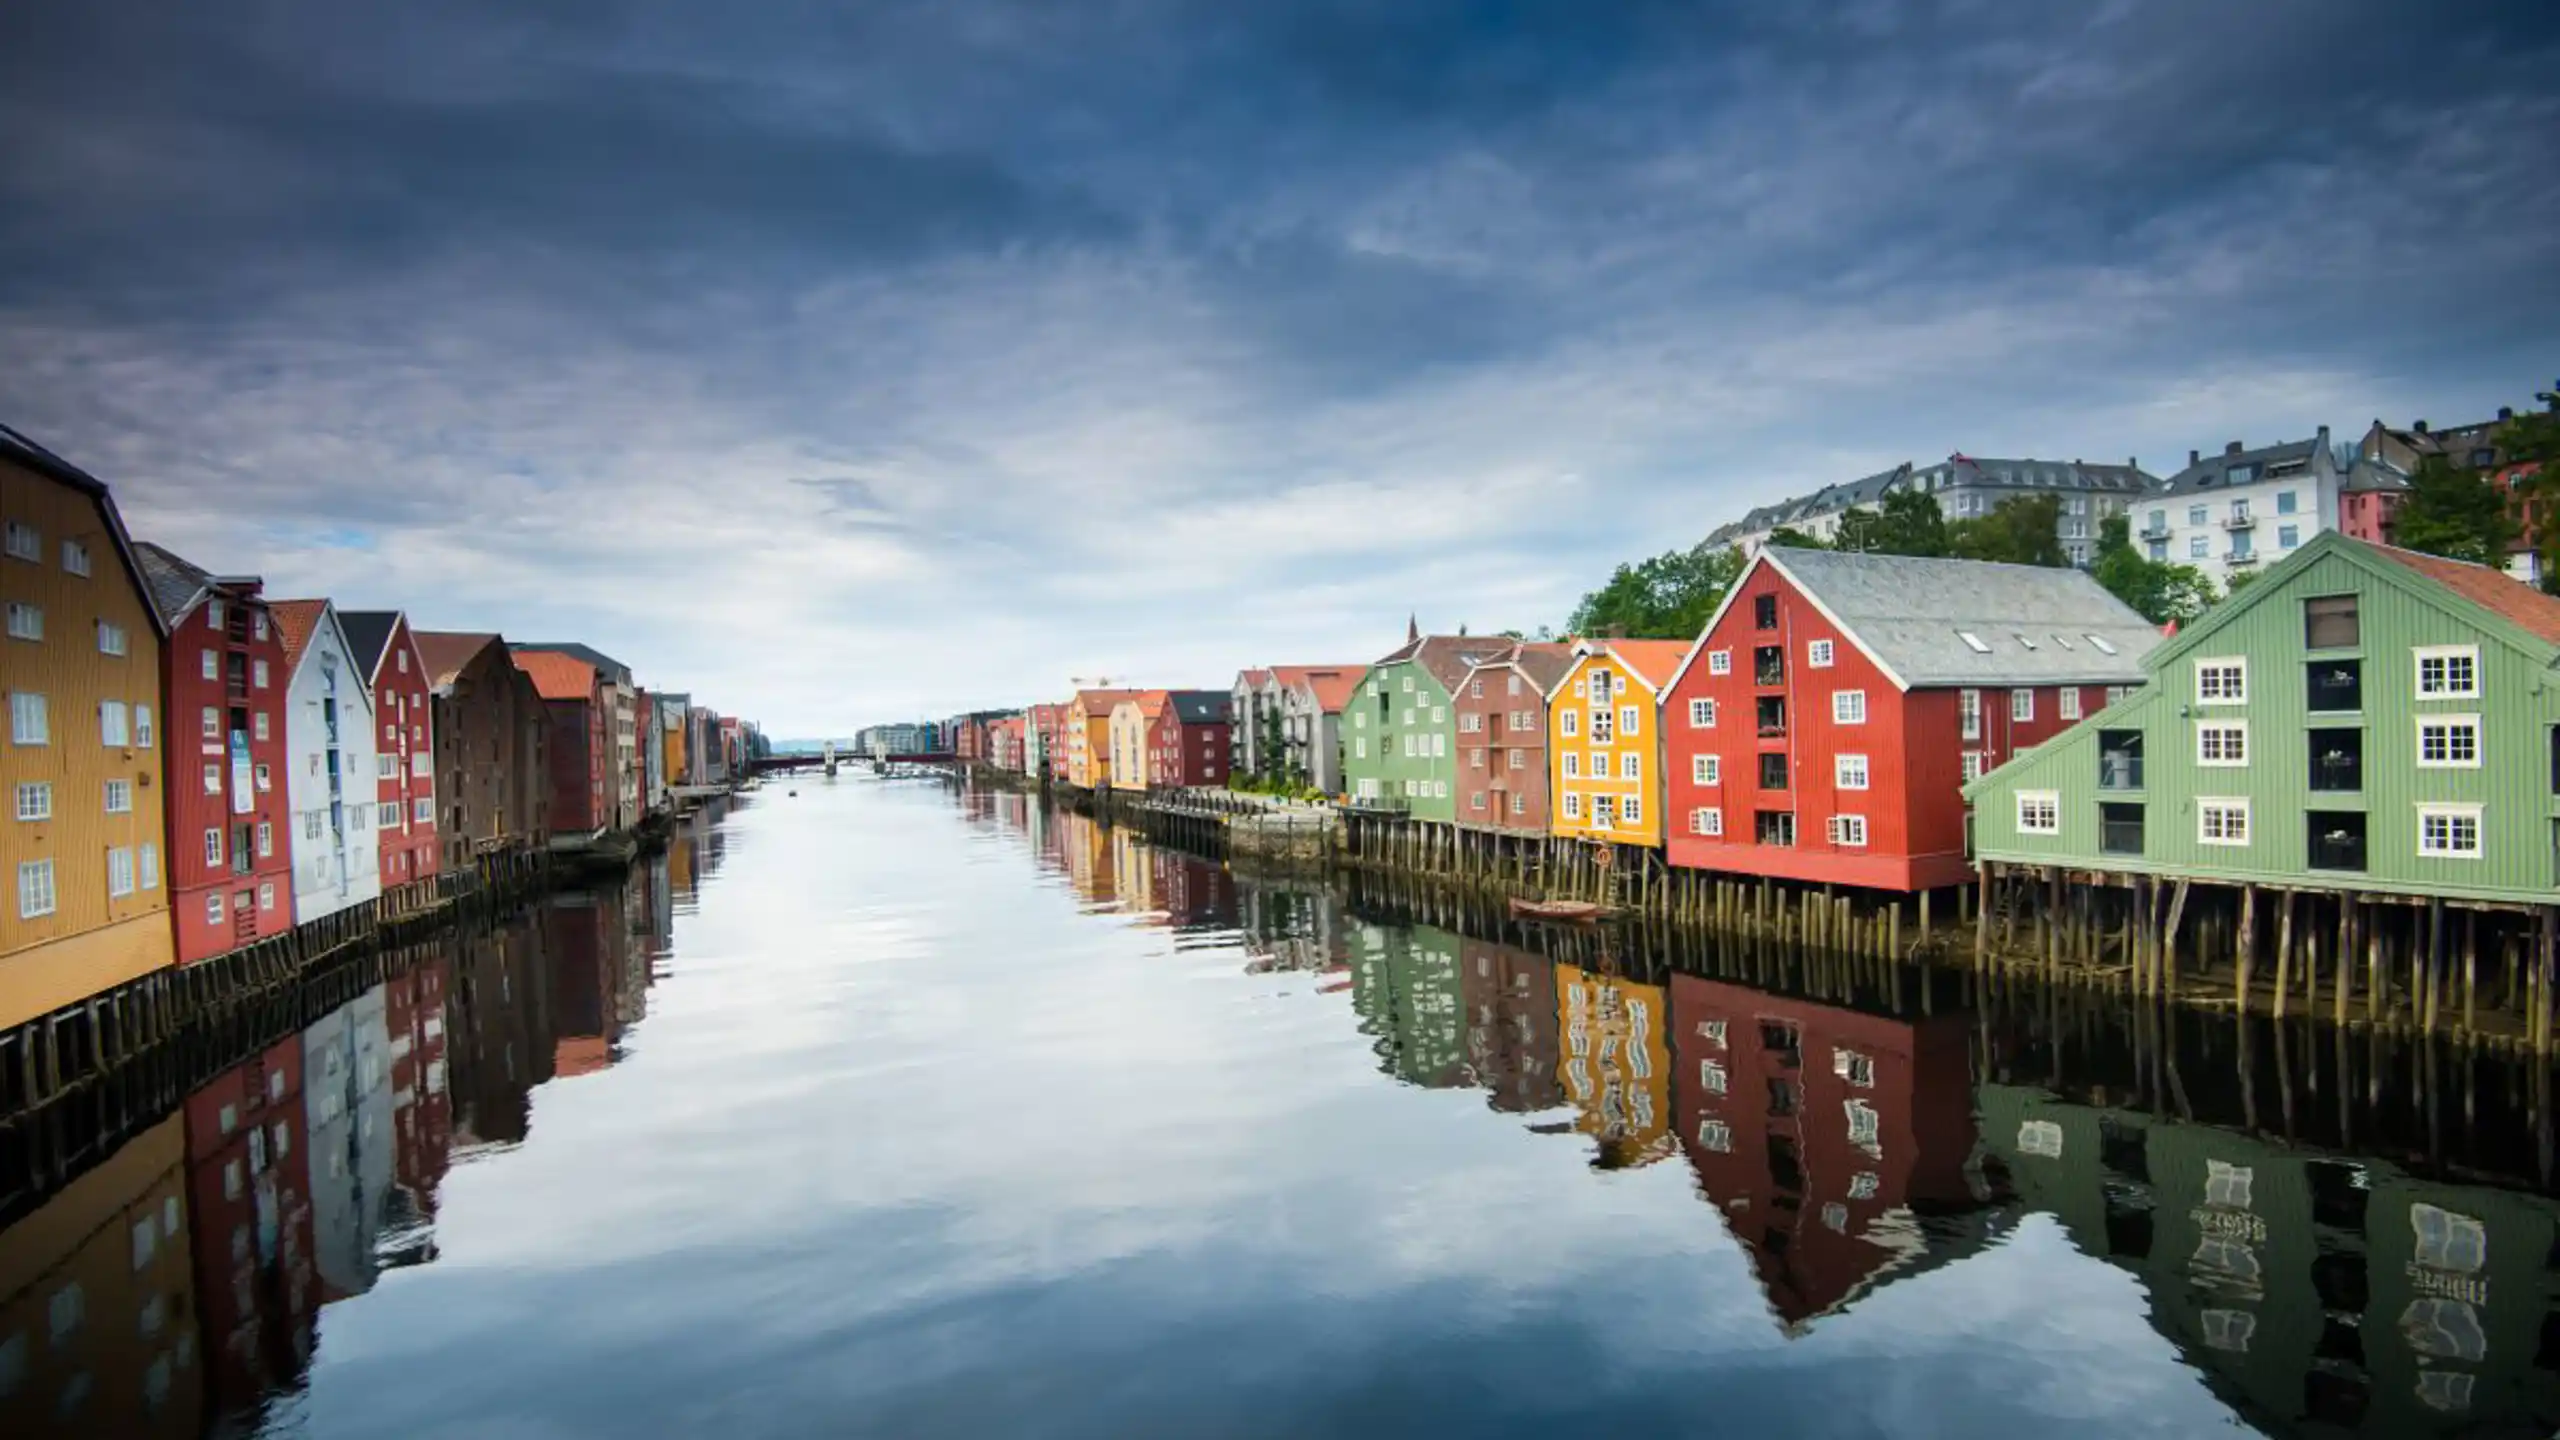 Trondheim City In Norway 2023 11 27 05 17 21 Utc (2)